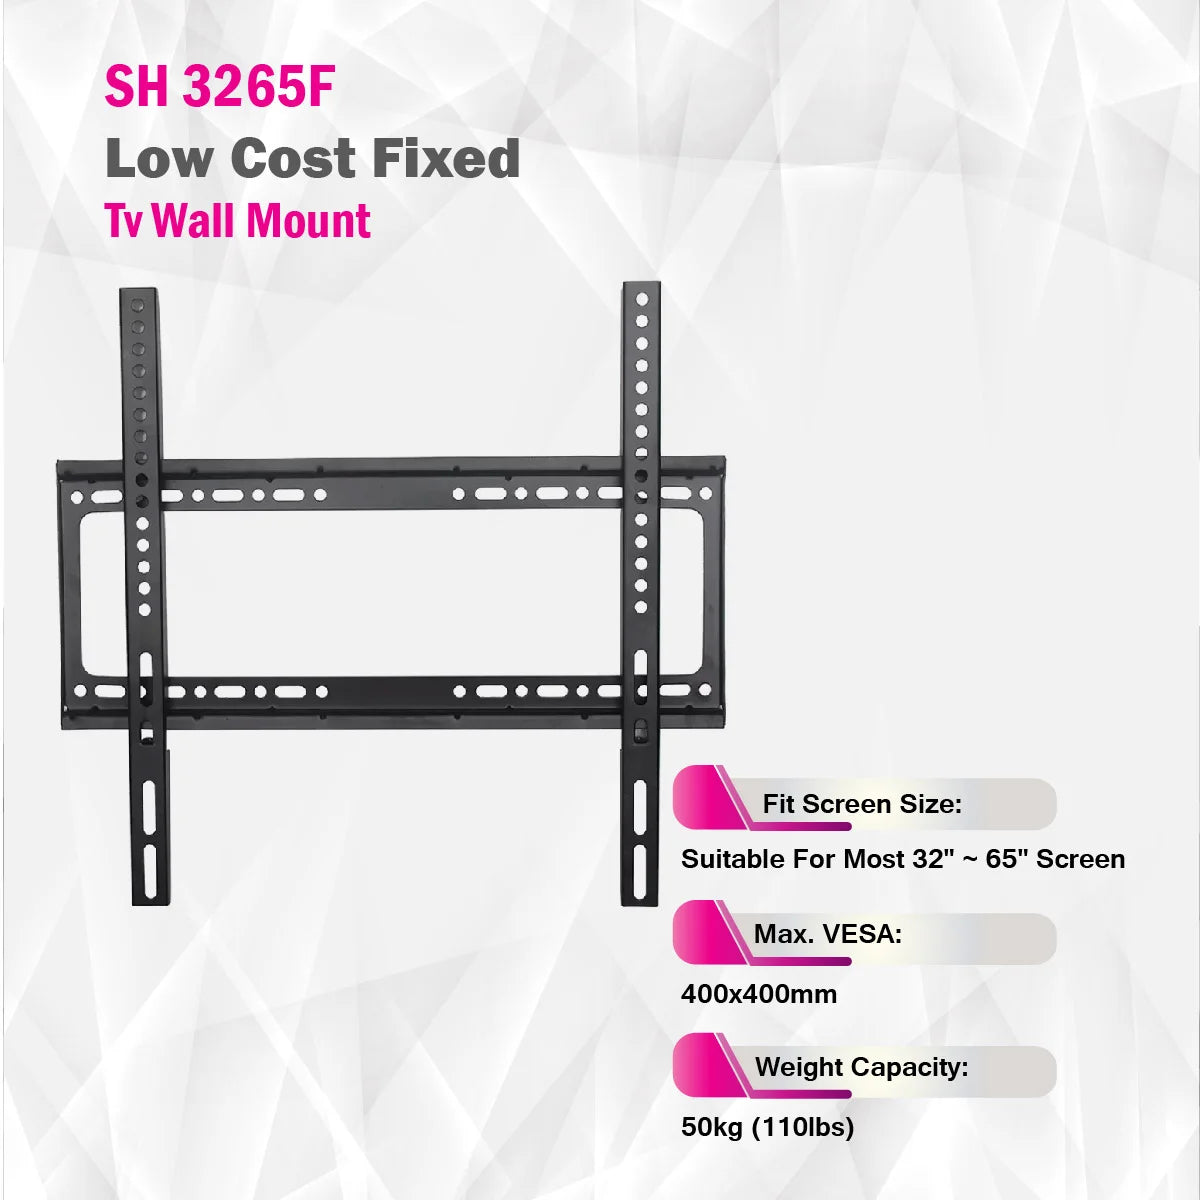 Skill Tech SH 3265F - Low Cost Fixed TV Wall Mount